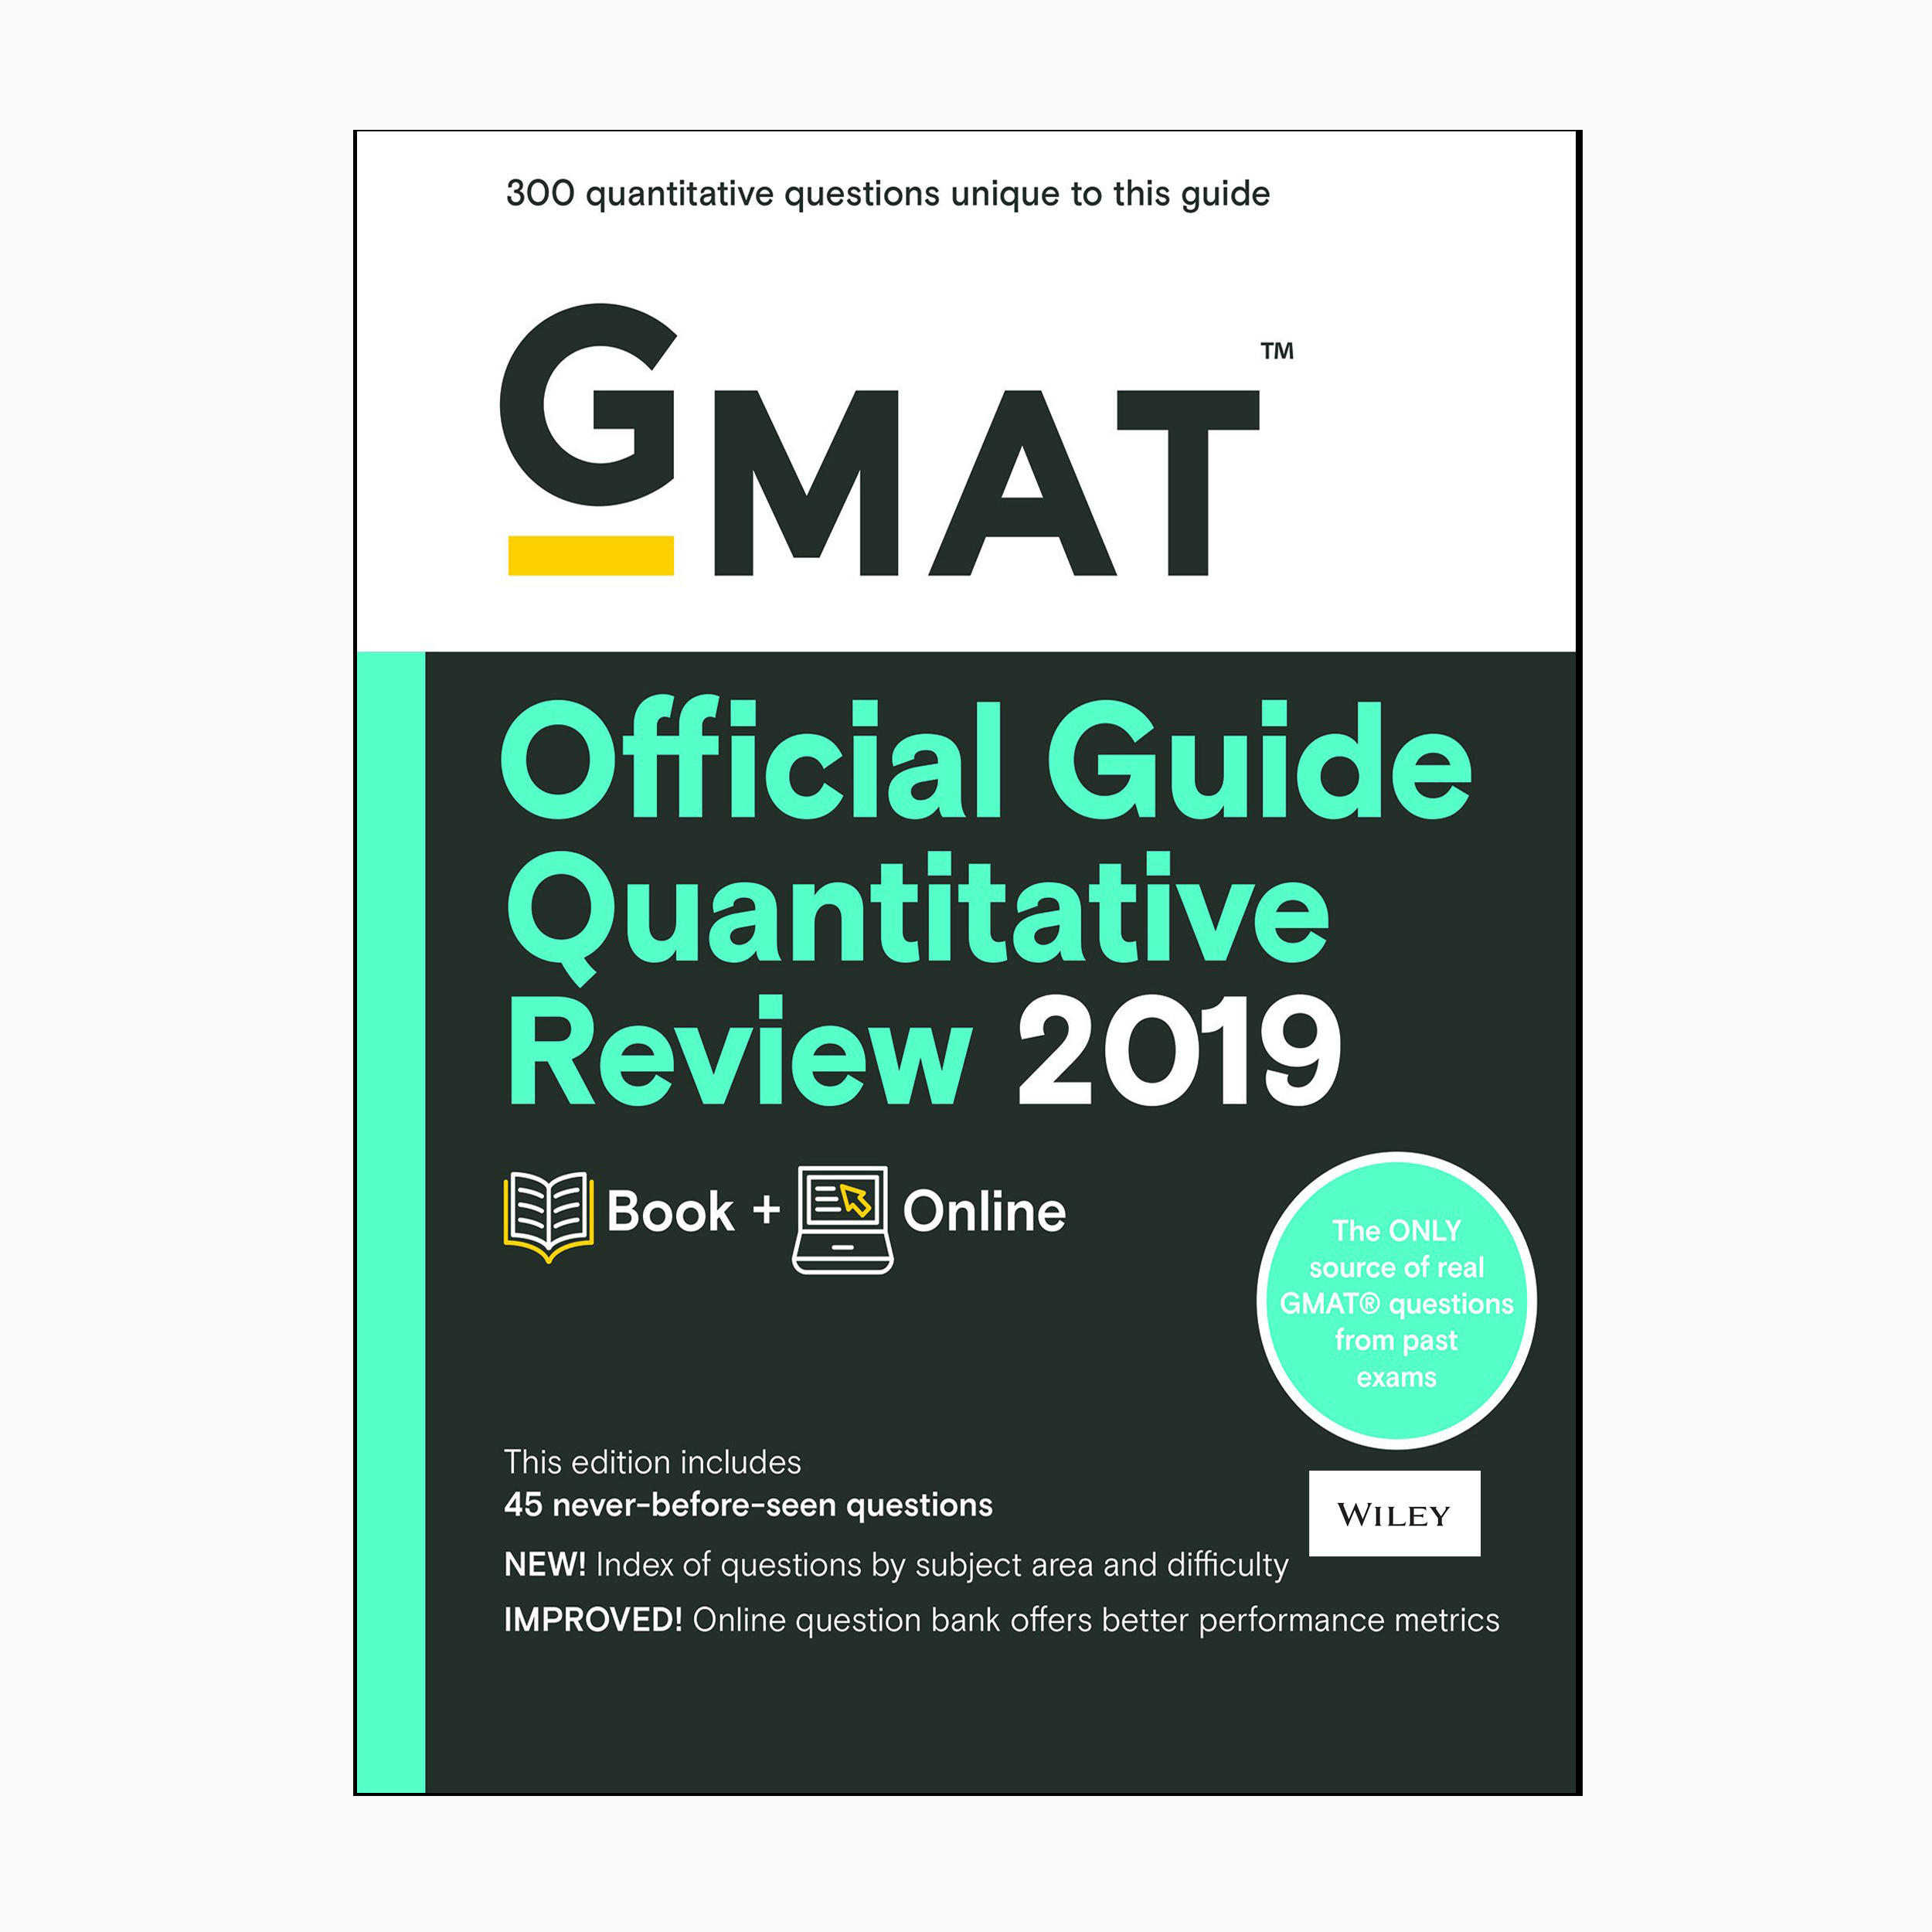 کتاب GMAT Official Guide Quantitative Review 2019 اثر GMAC انتشارات ویلی